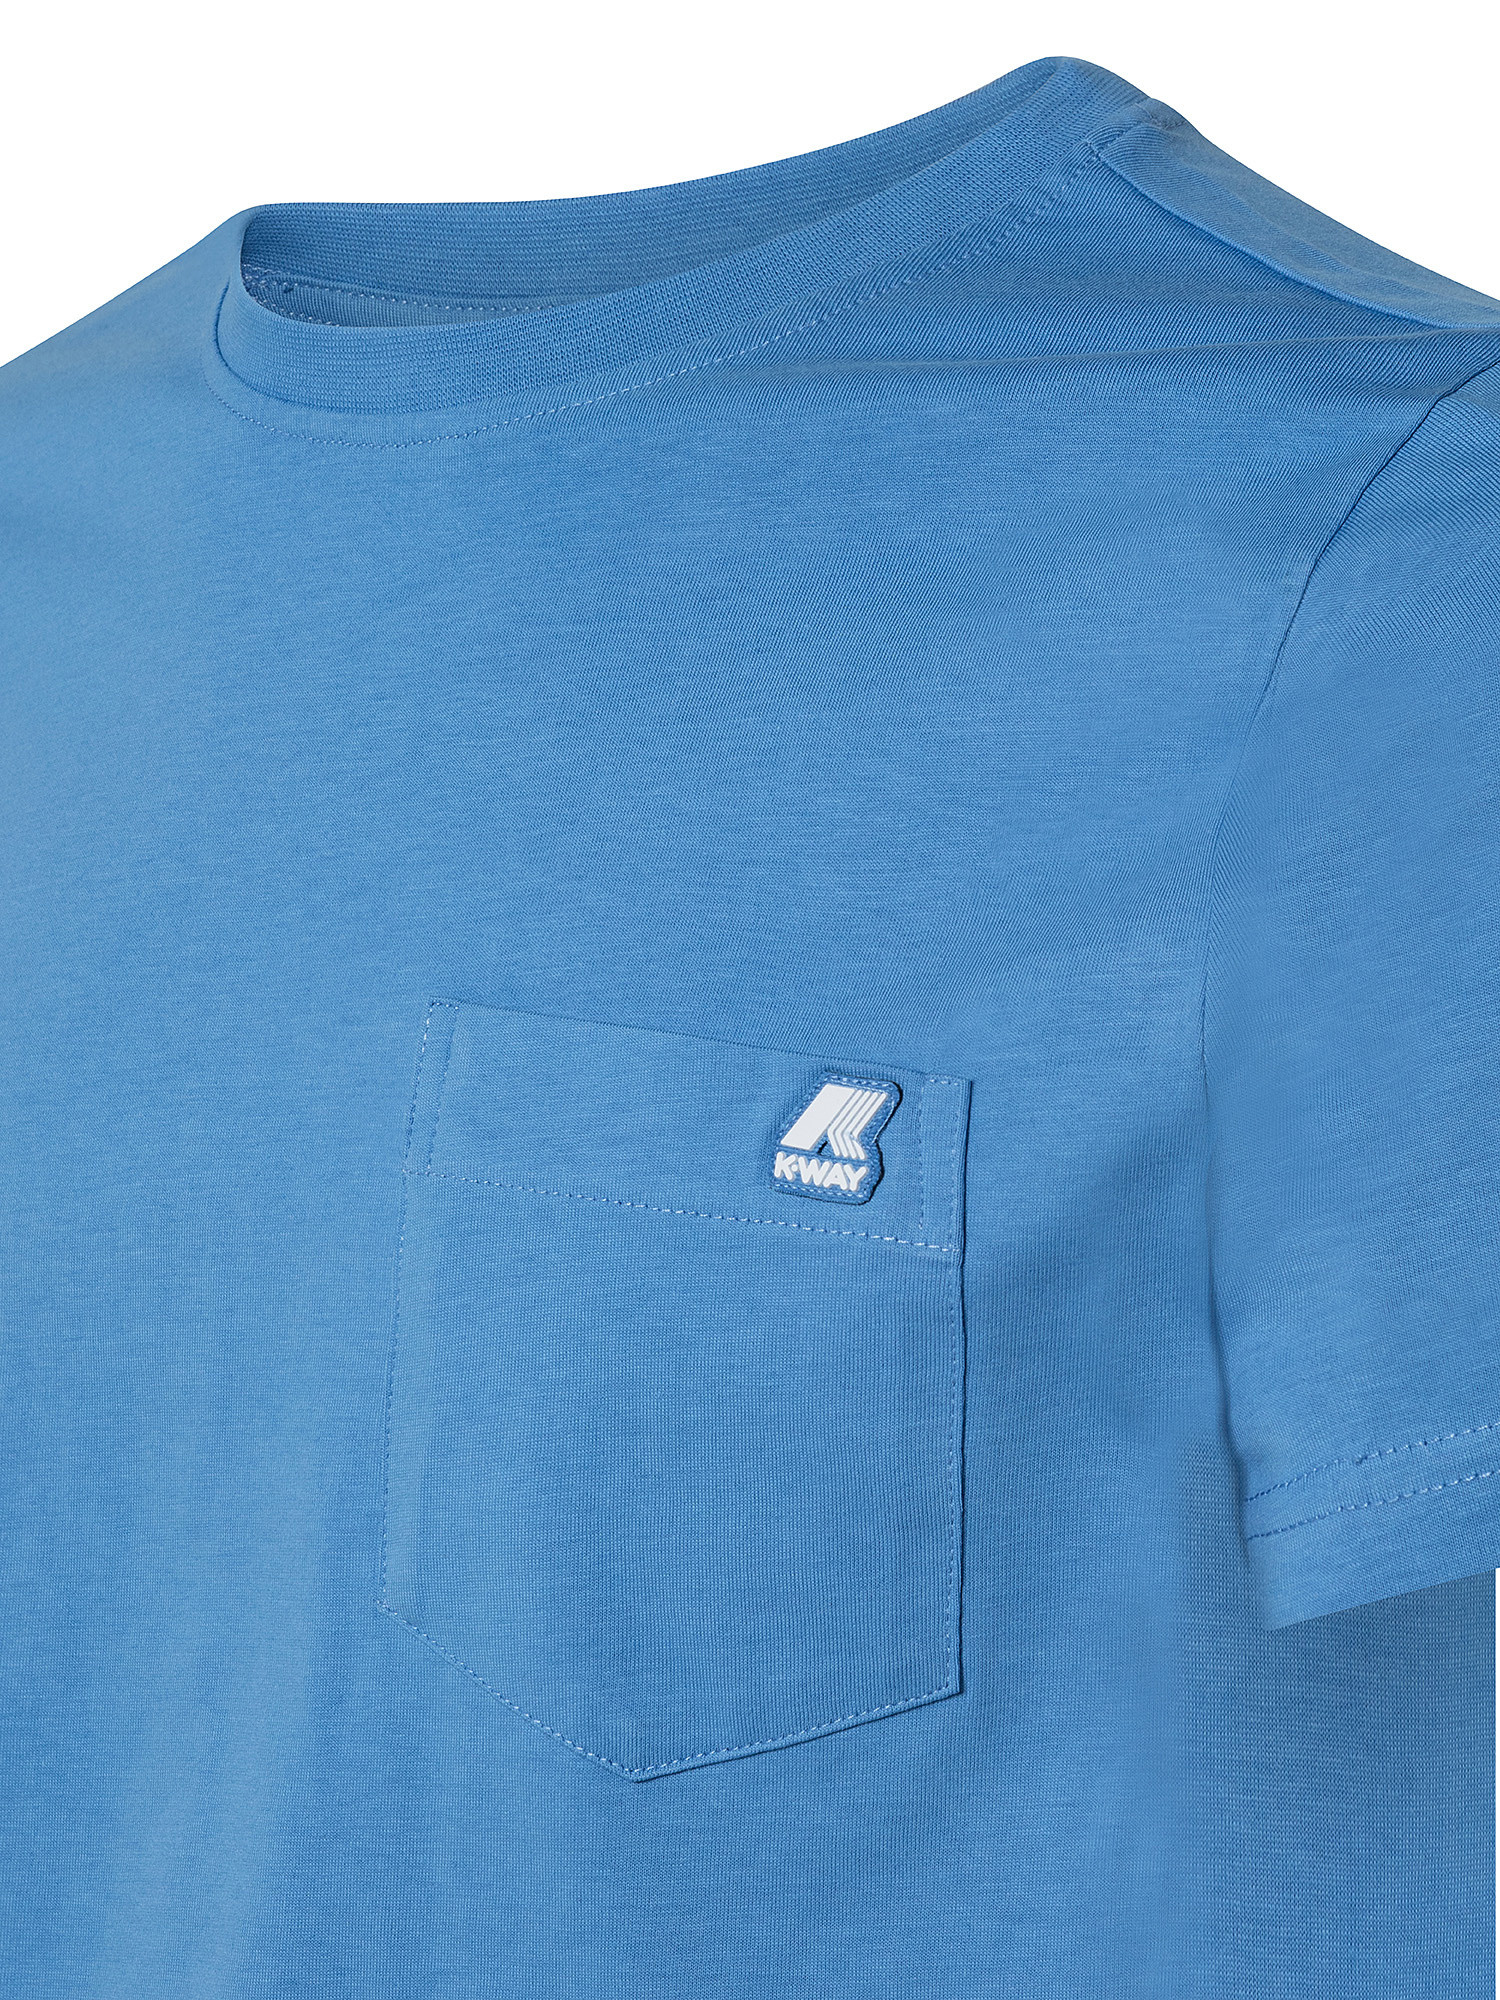 T-shirt slim fit, Azzurro, large image number 2